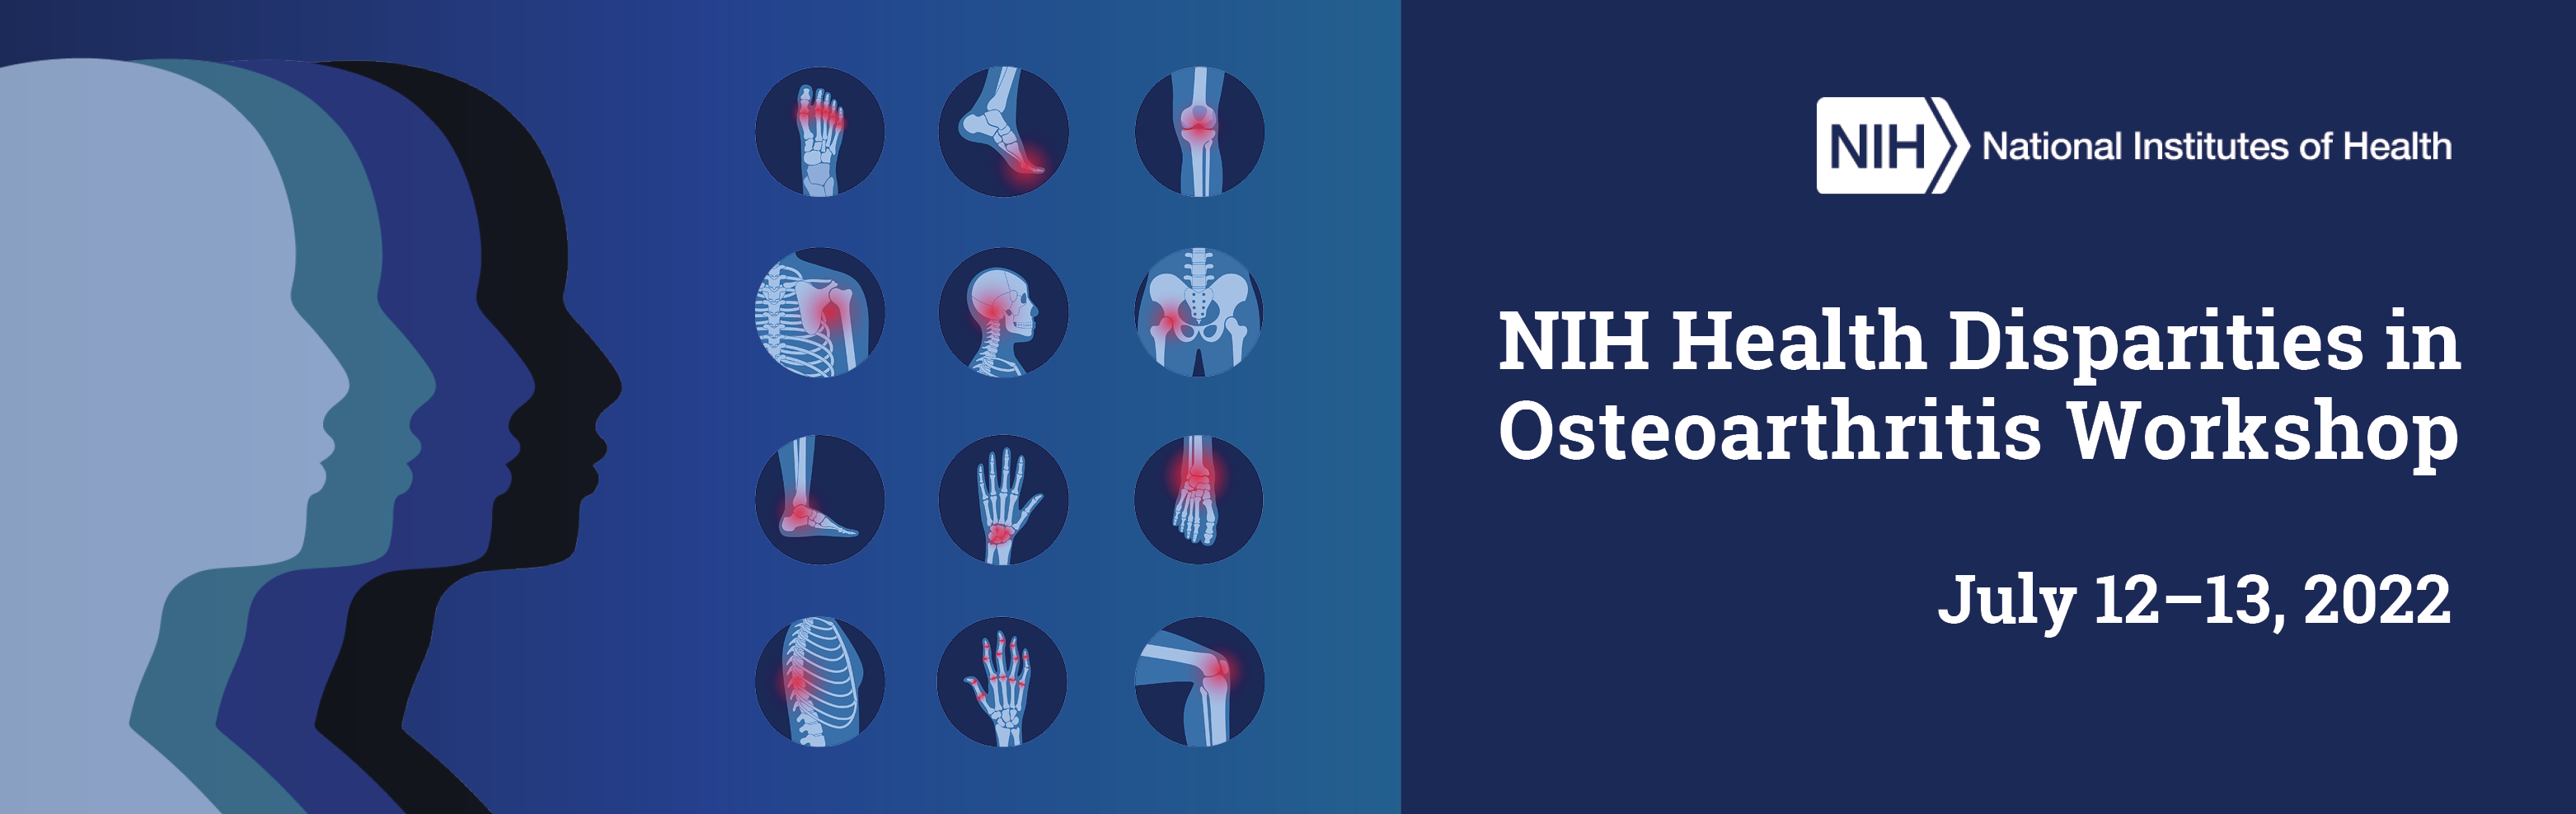 NIH - Health Disparities in Osteoarthritis Workshop